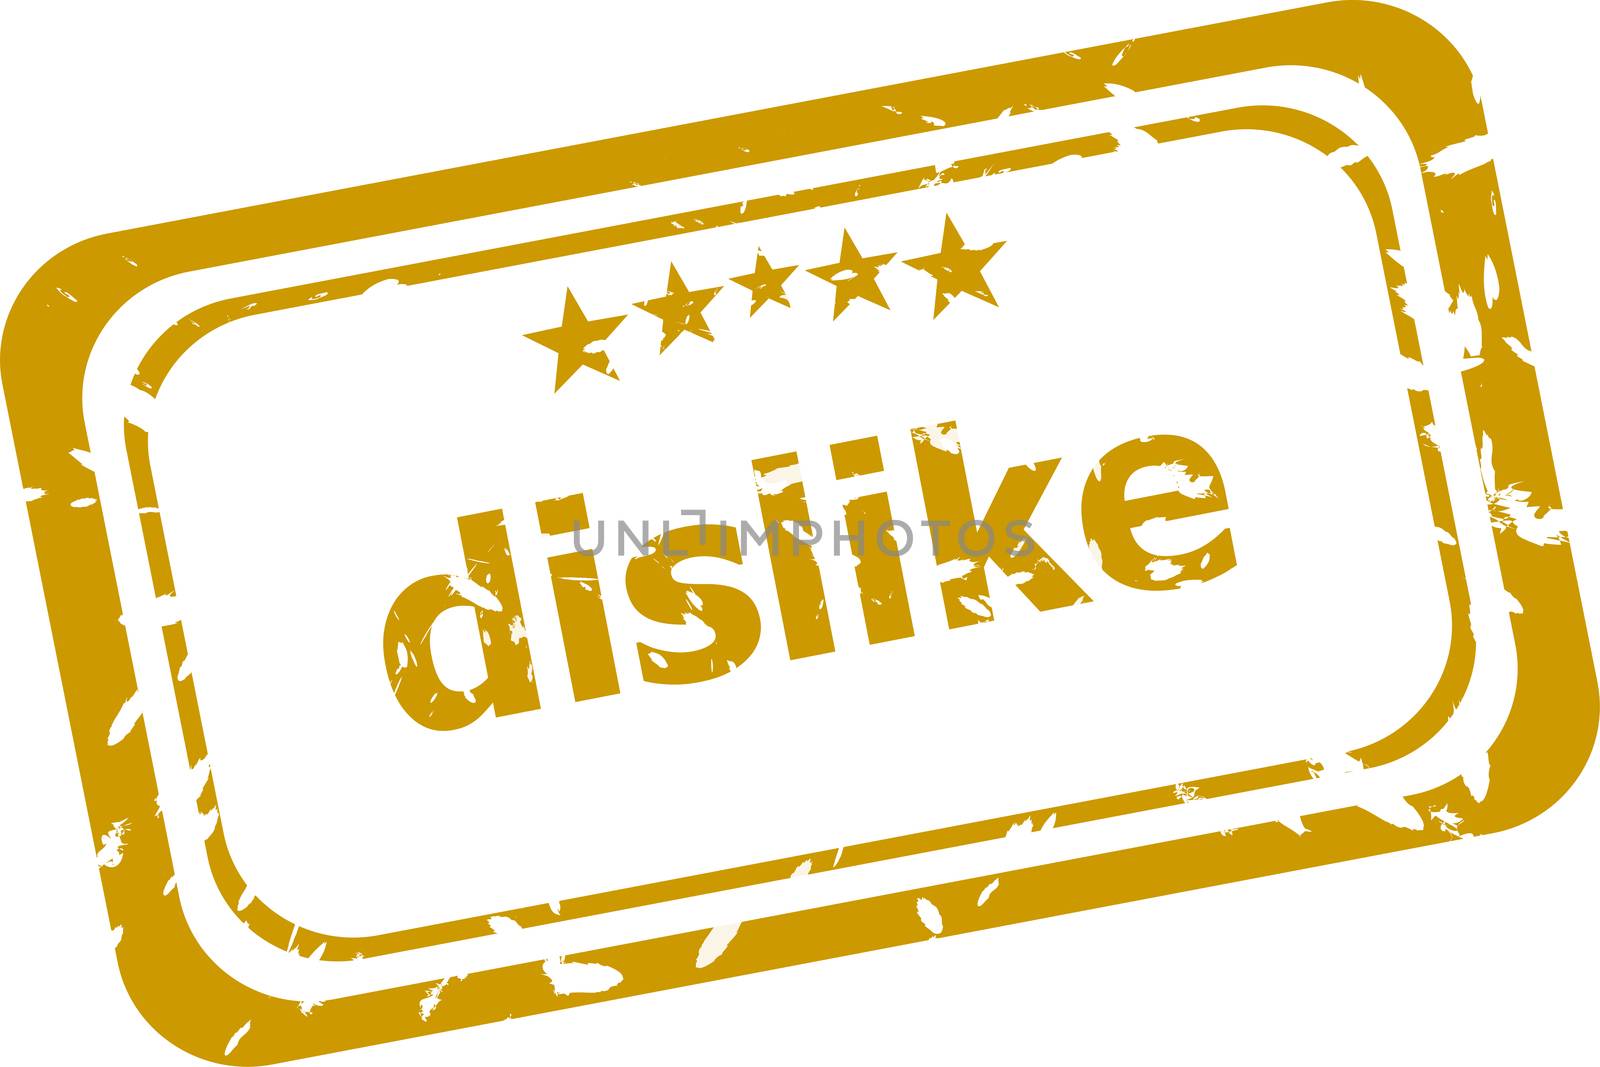 dislike stamp isolated on white background